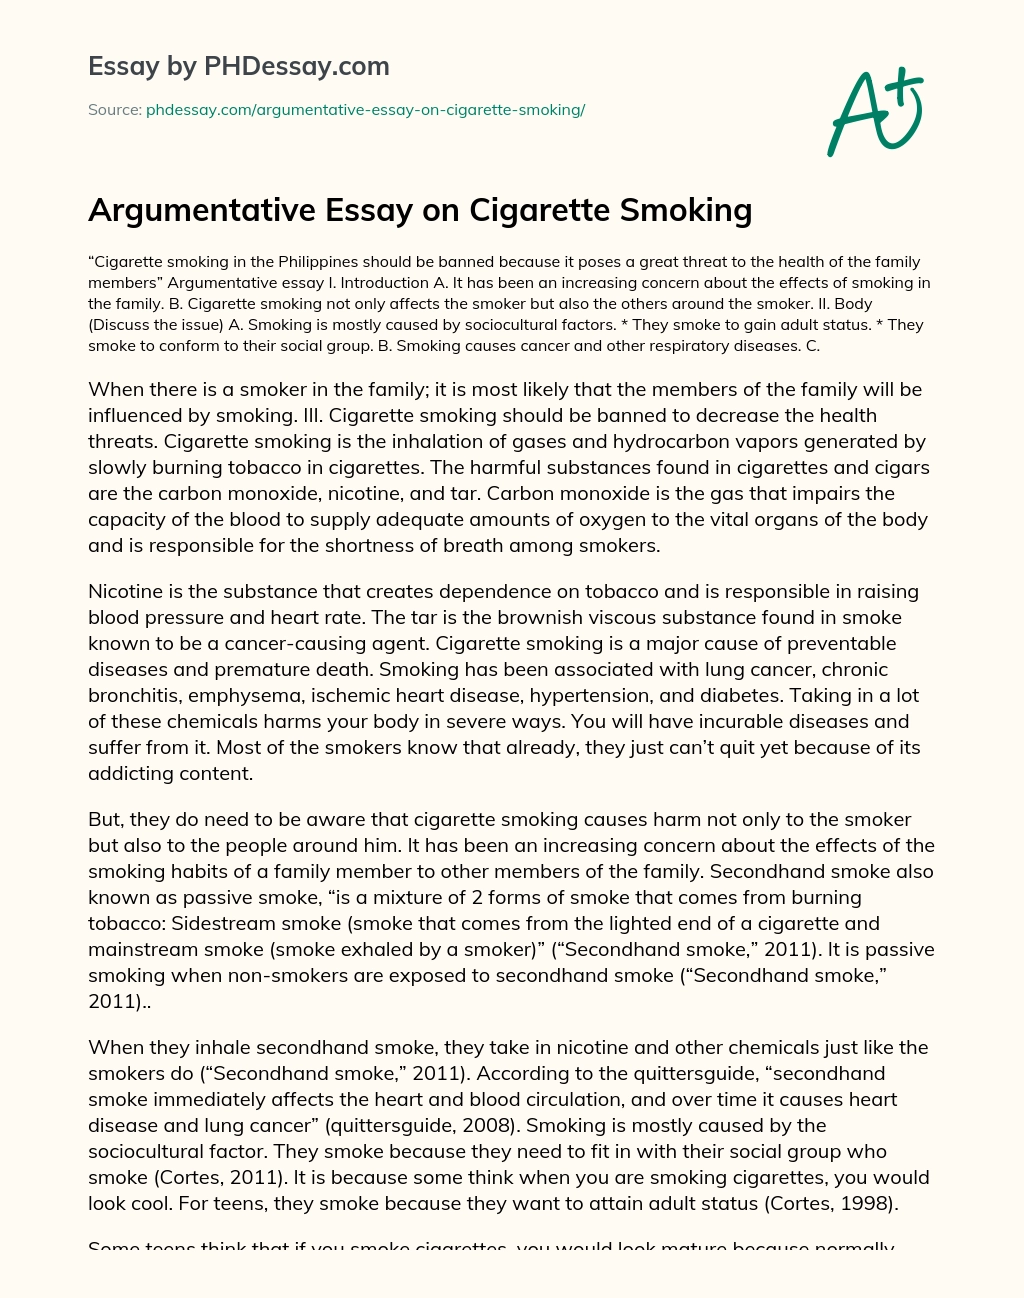 Argumentative Essay on Cigarette Smoking essay